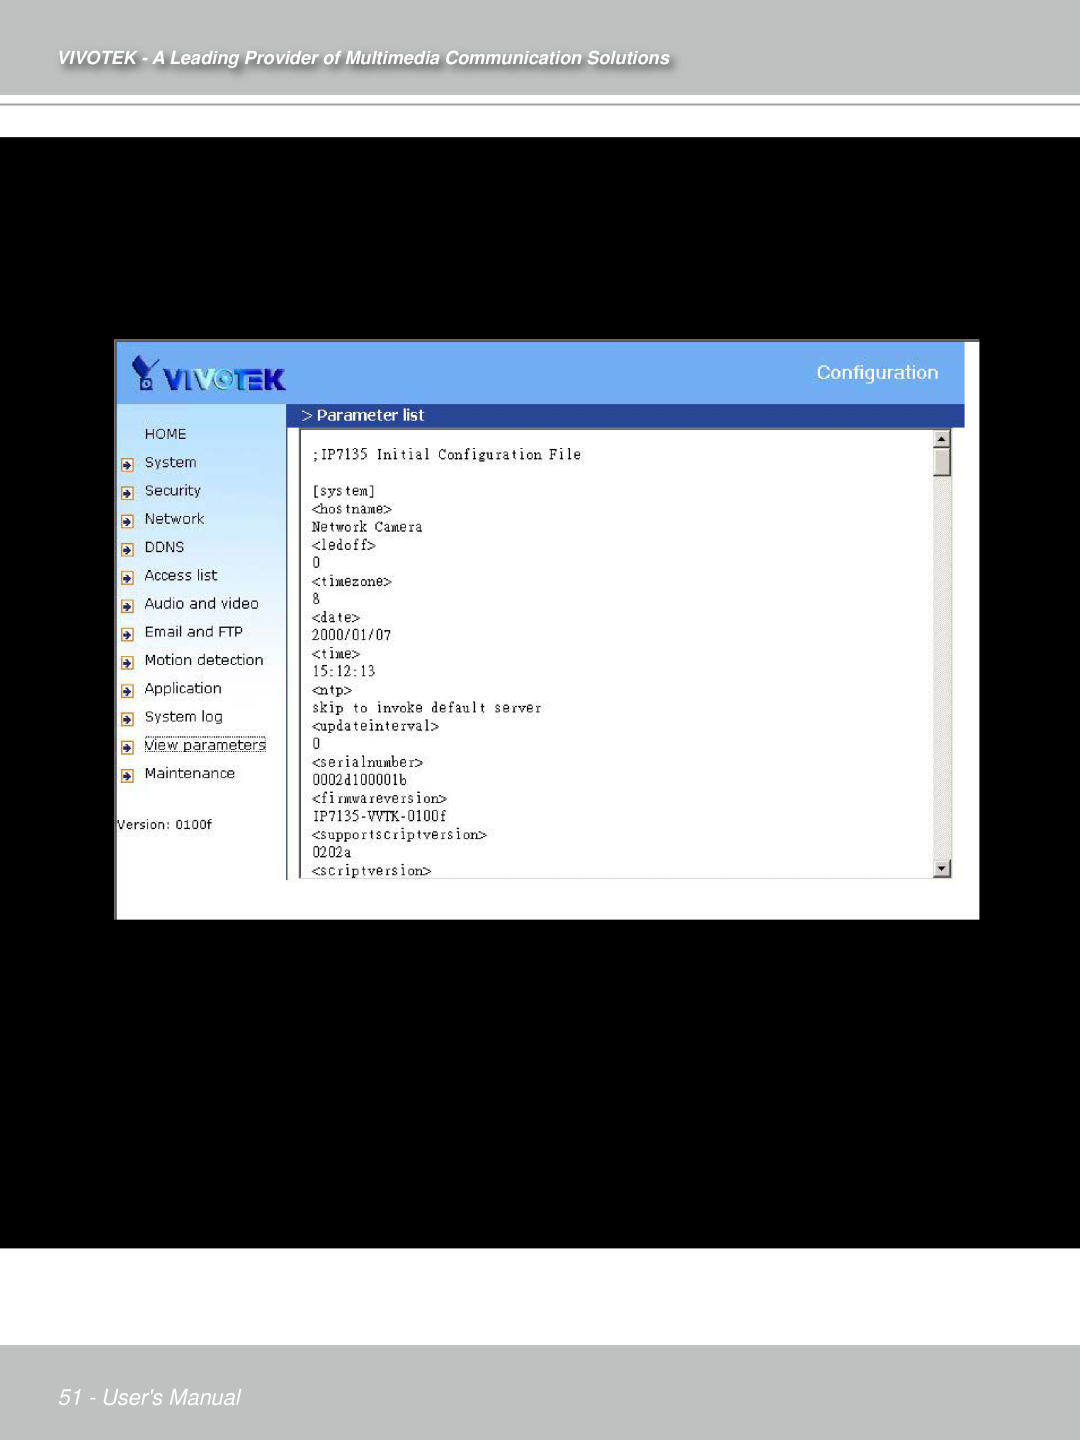 Vivotek IP7132 Viewing system parameters, Users Manual, VIVOTEK - A Leading Provider of Multimedia Communication Solutions 